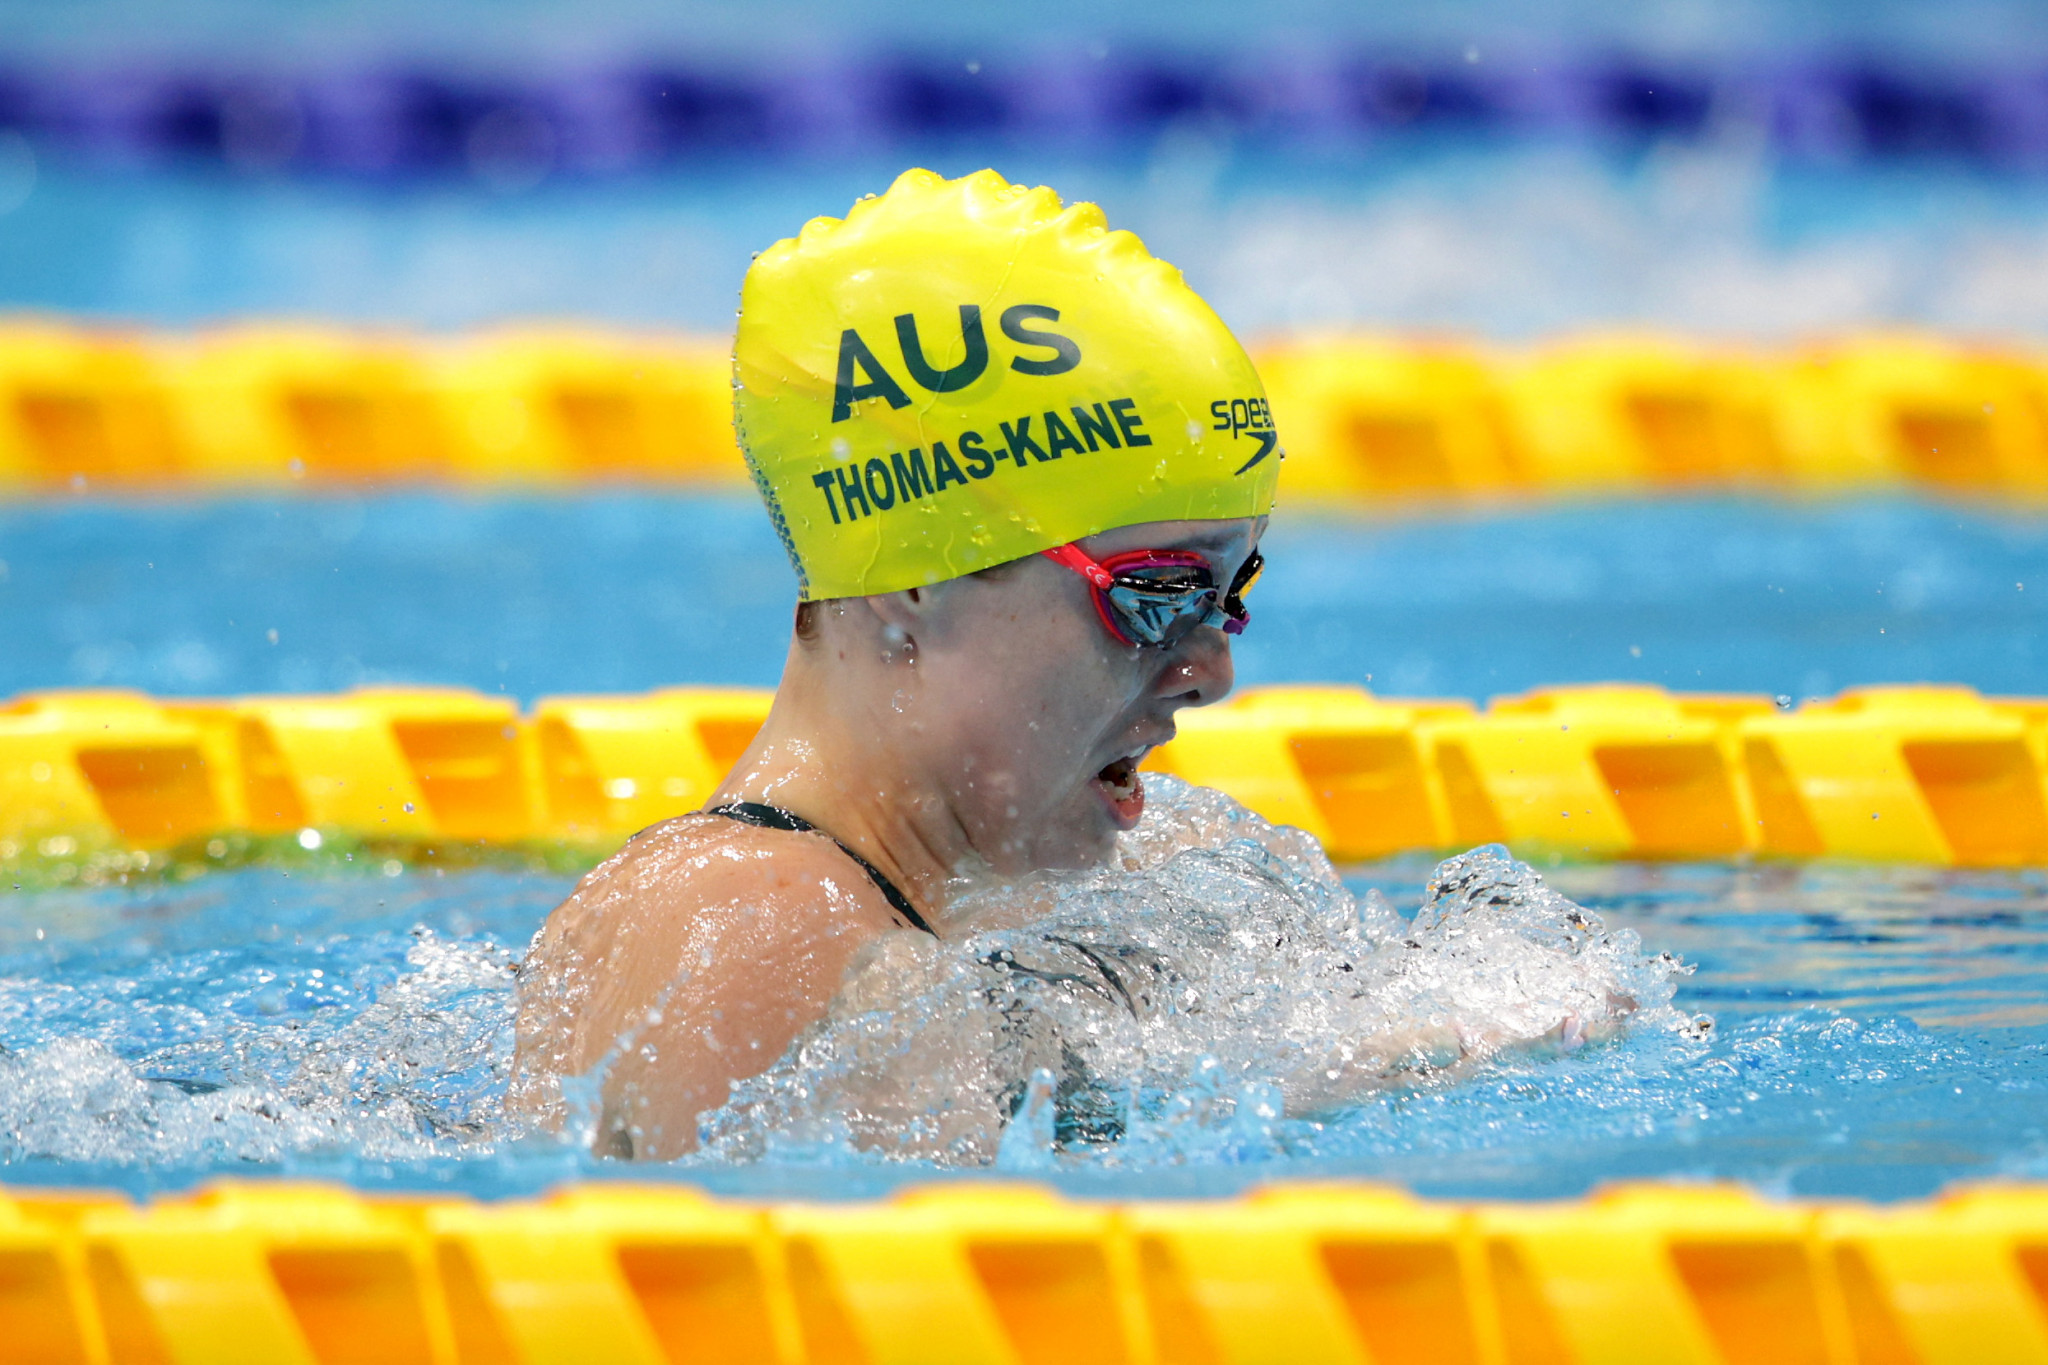 Australian Paralympic gold medallist Kane retires from swimming